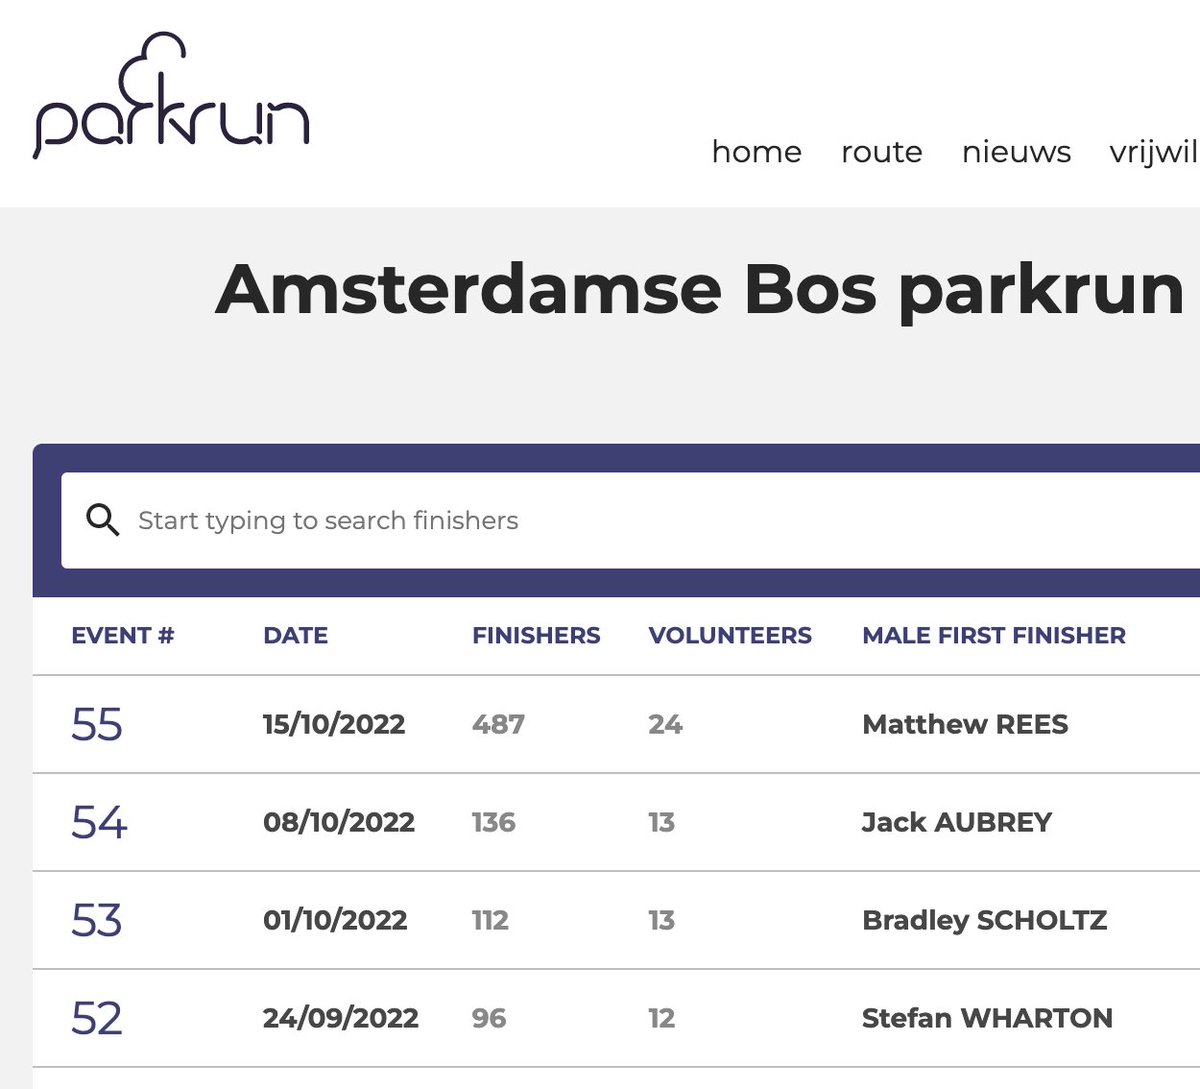 Tell me it's Amsterdam Marathon weekend without telling me it's Amsterdam Marathon weekend...